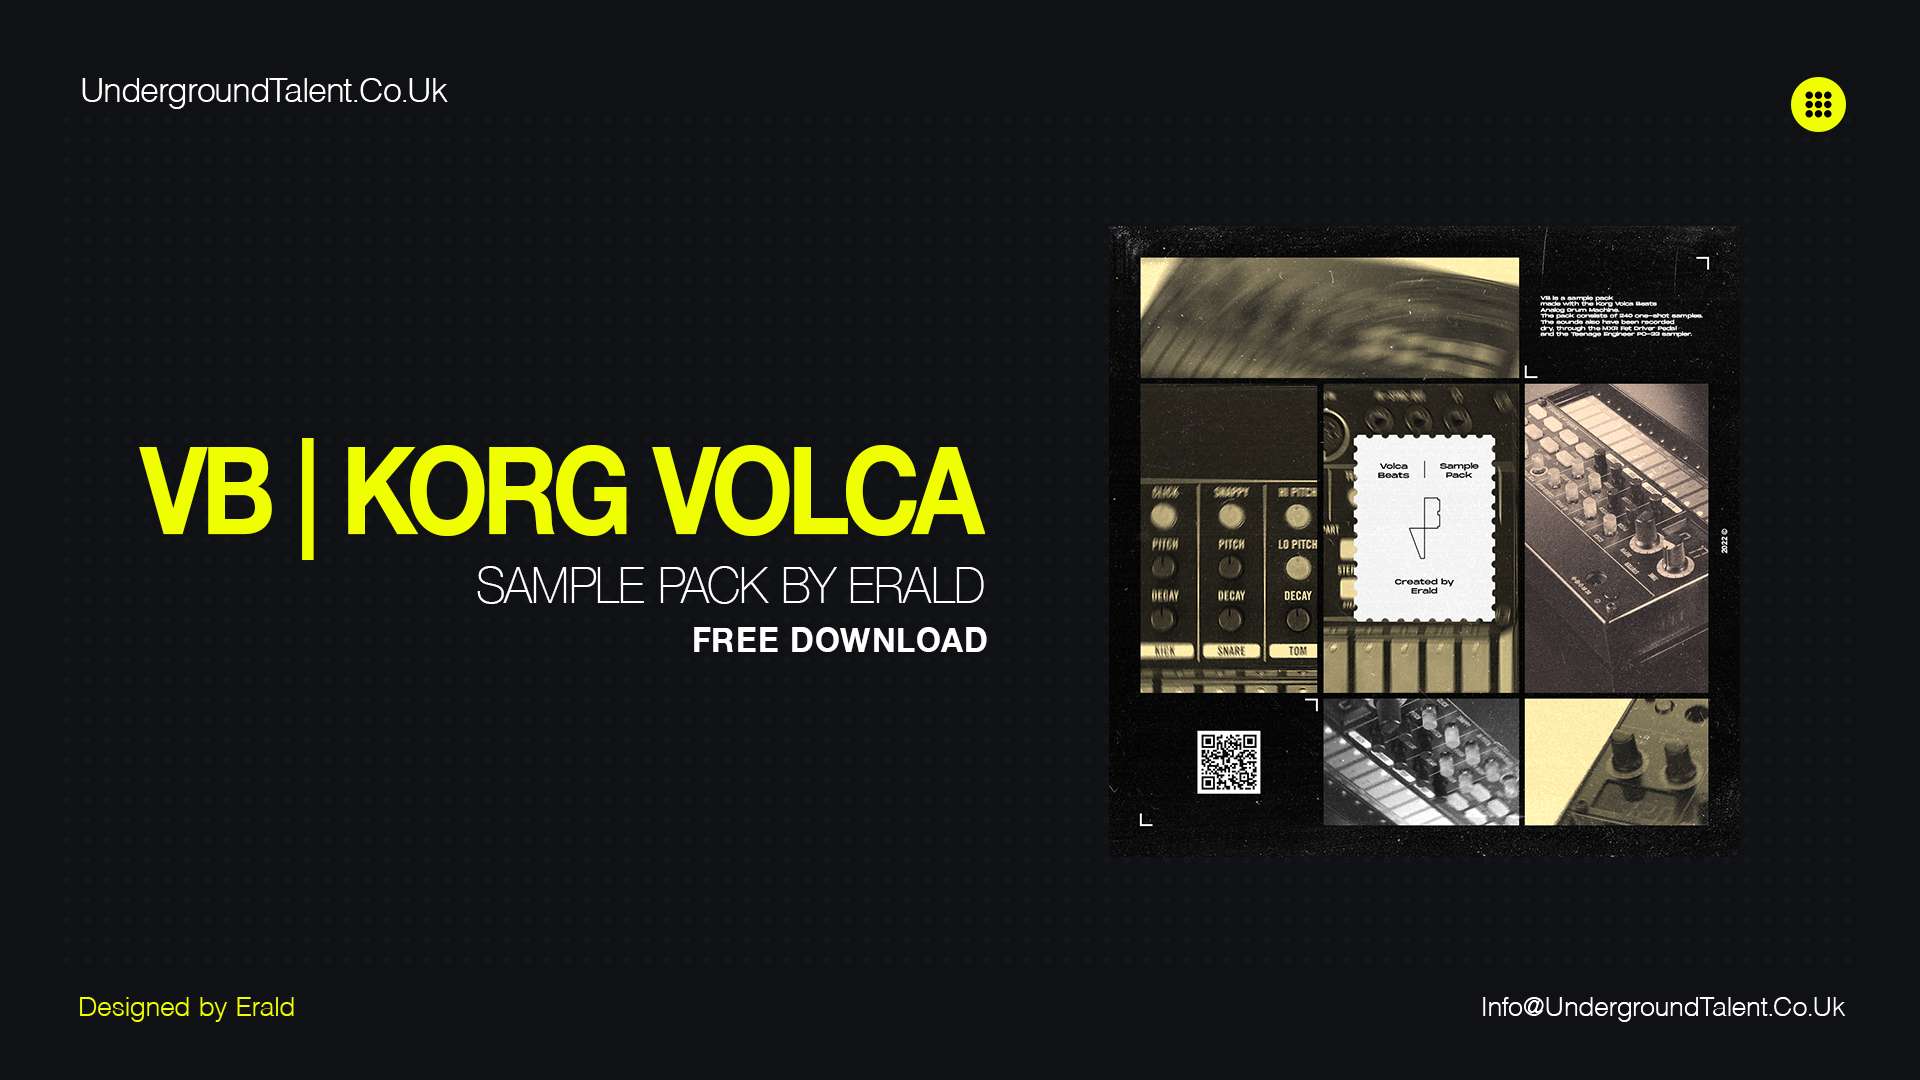 VB – Korg Volca Beats Sample Pack by Erald (Free Download)